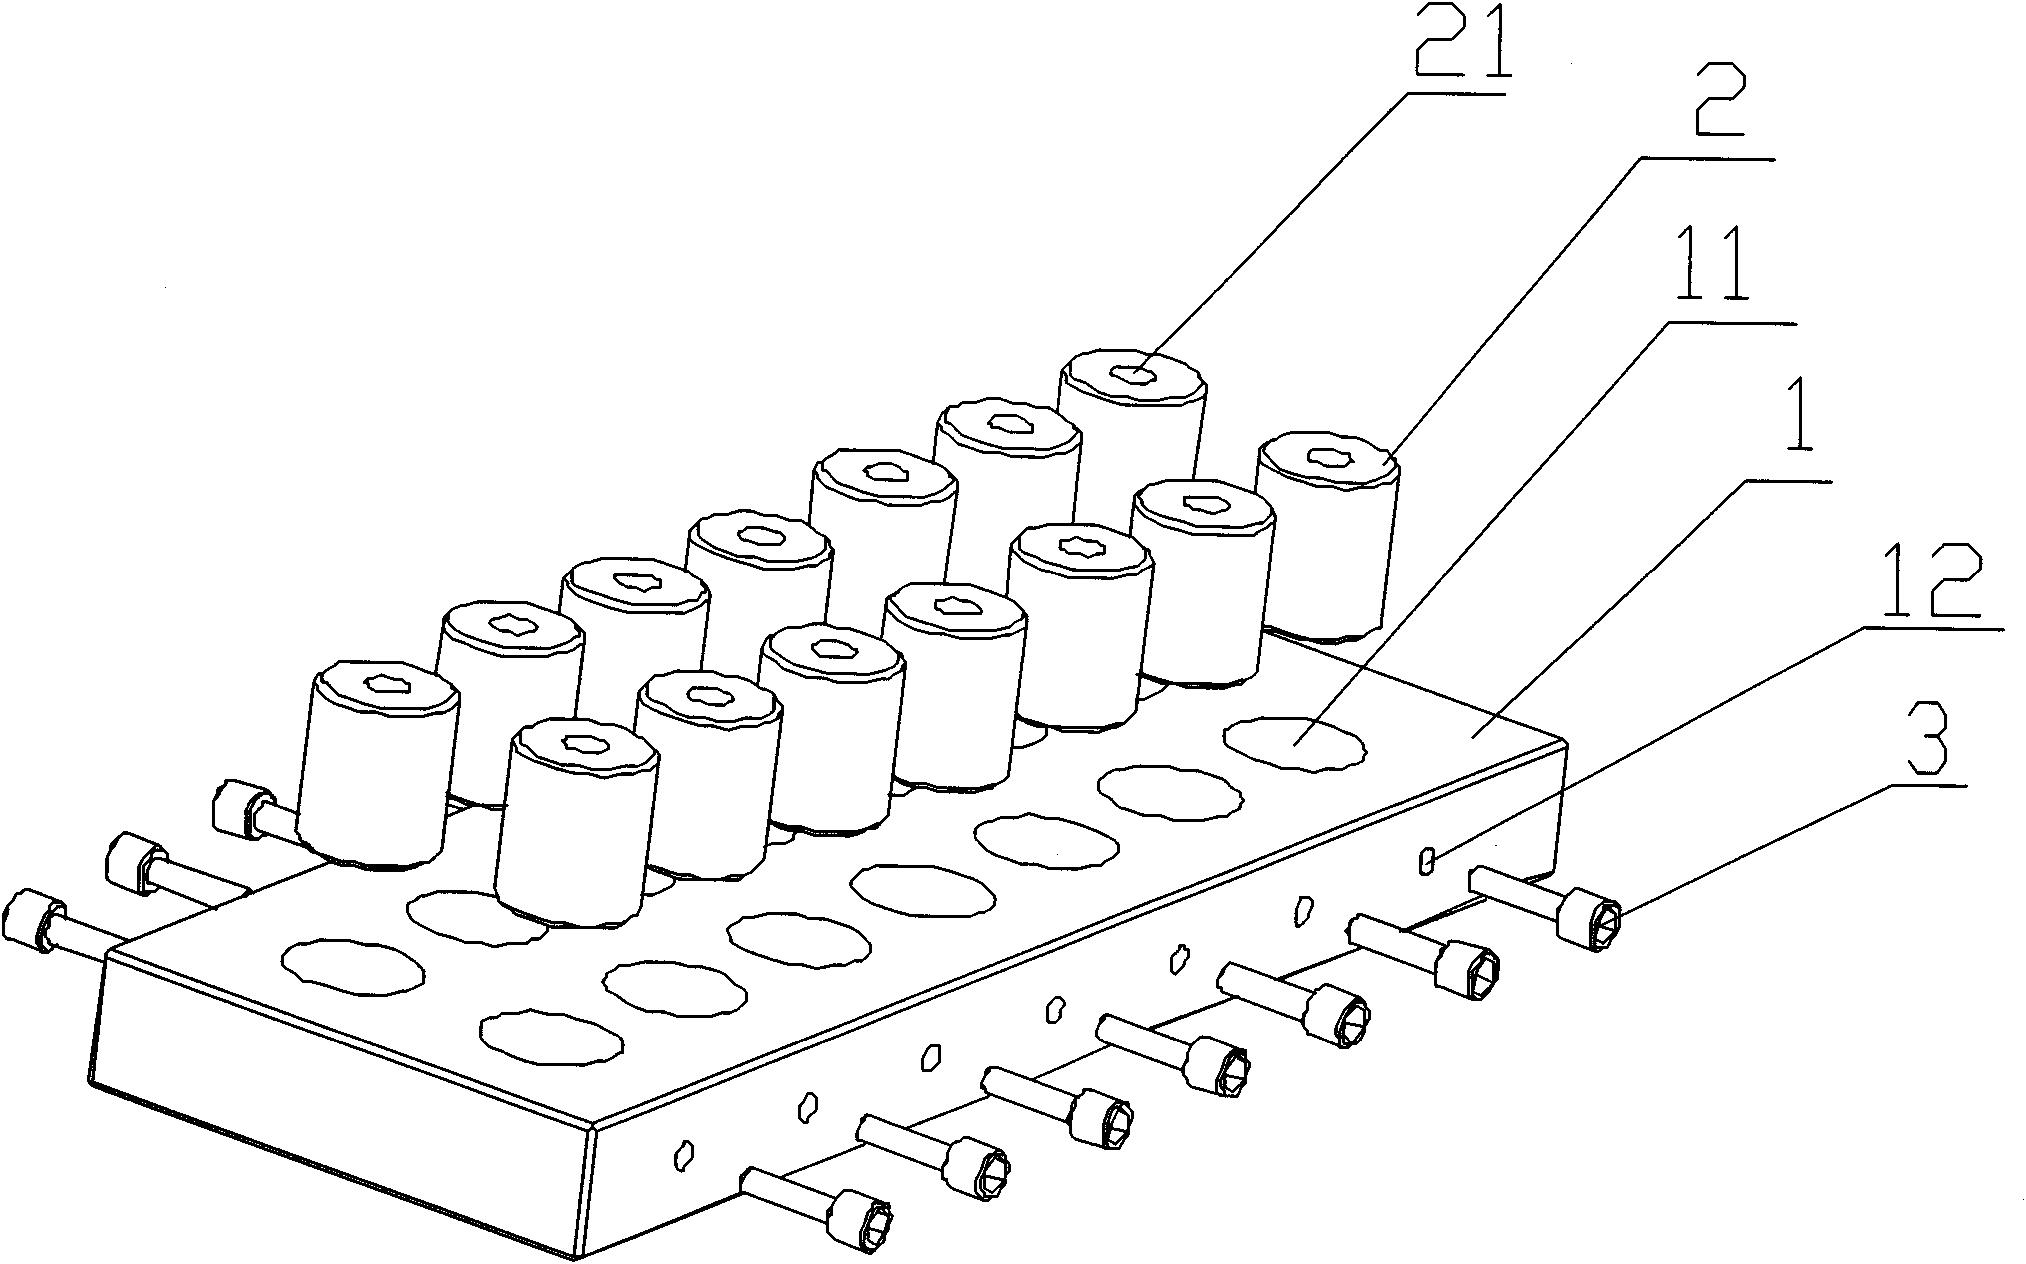 Positioning hole jig used in slow-silk thread cutting machine